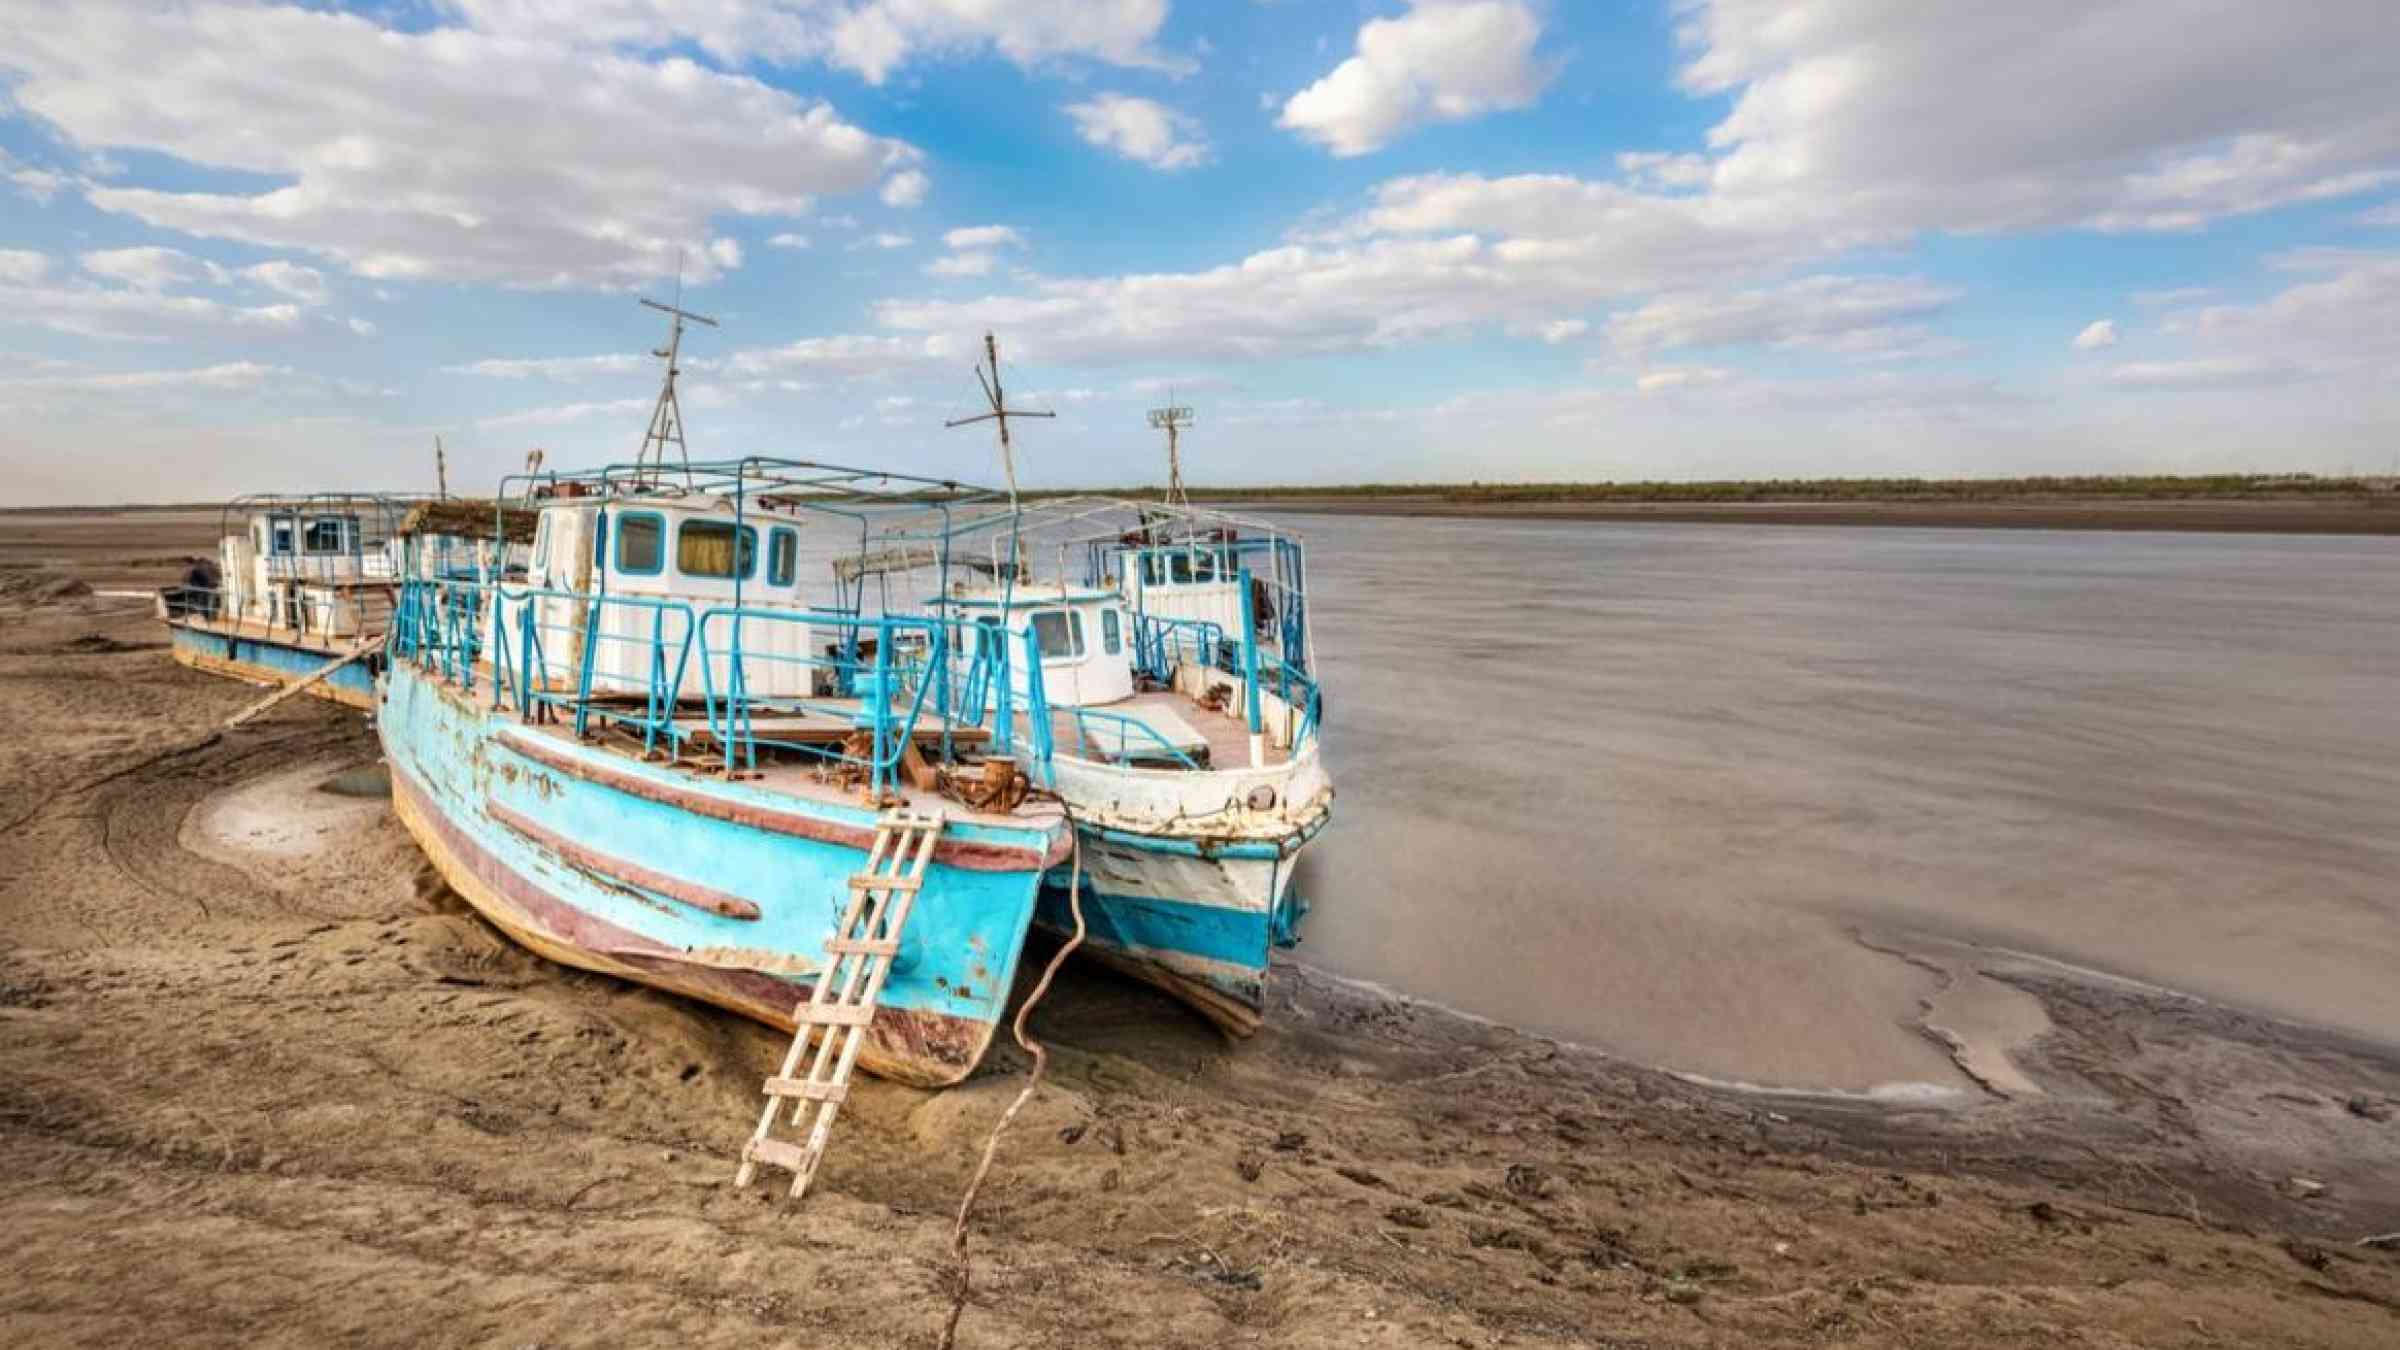 Amu Darya River, Uzbekistan. Sergey Dzyuba/Shutterstock